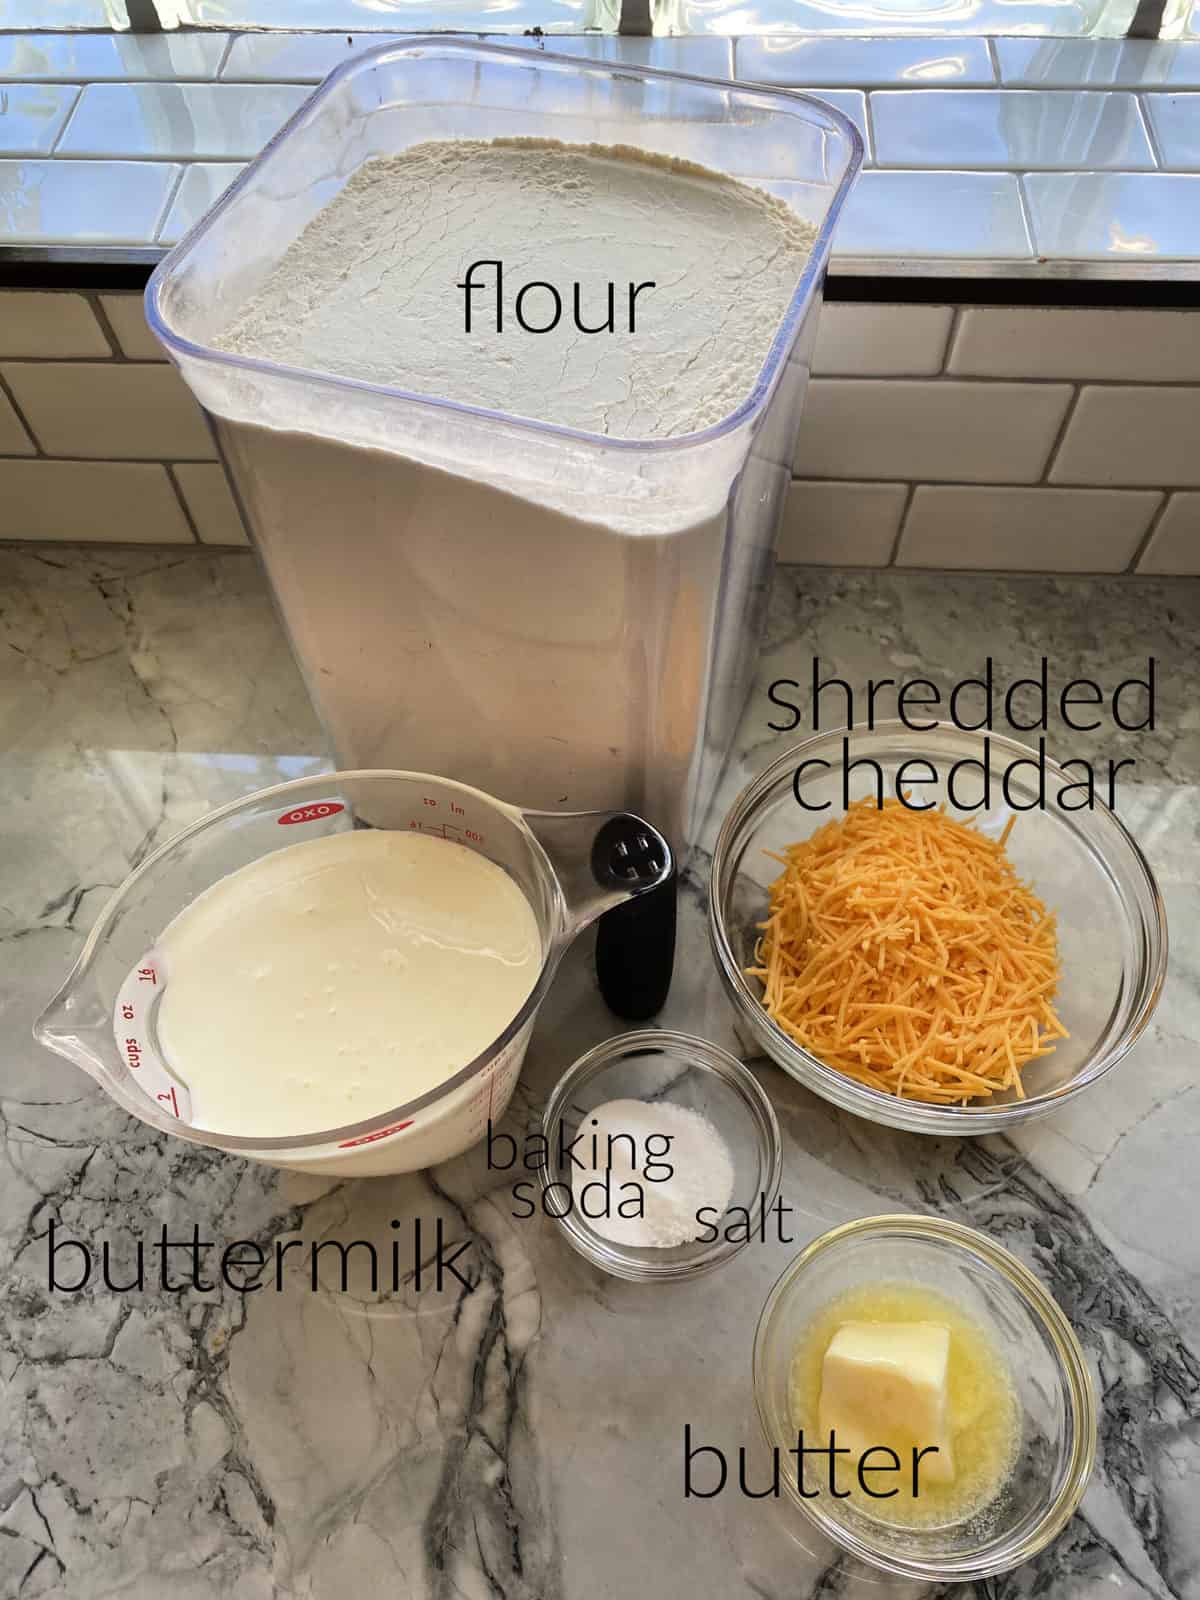 Ingredients: Flour, buttermilk, shredded cheddar, baking soda, salt, and butter.